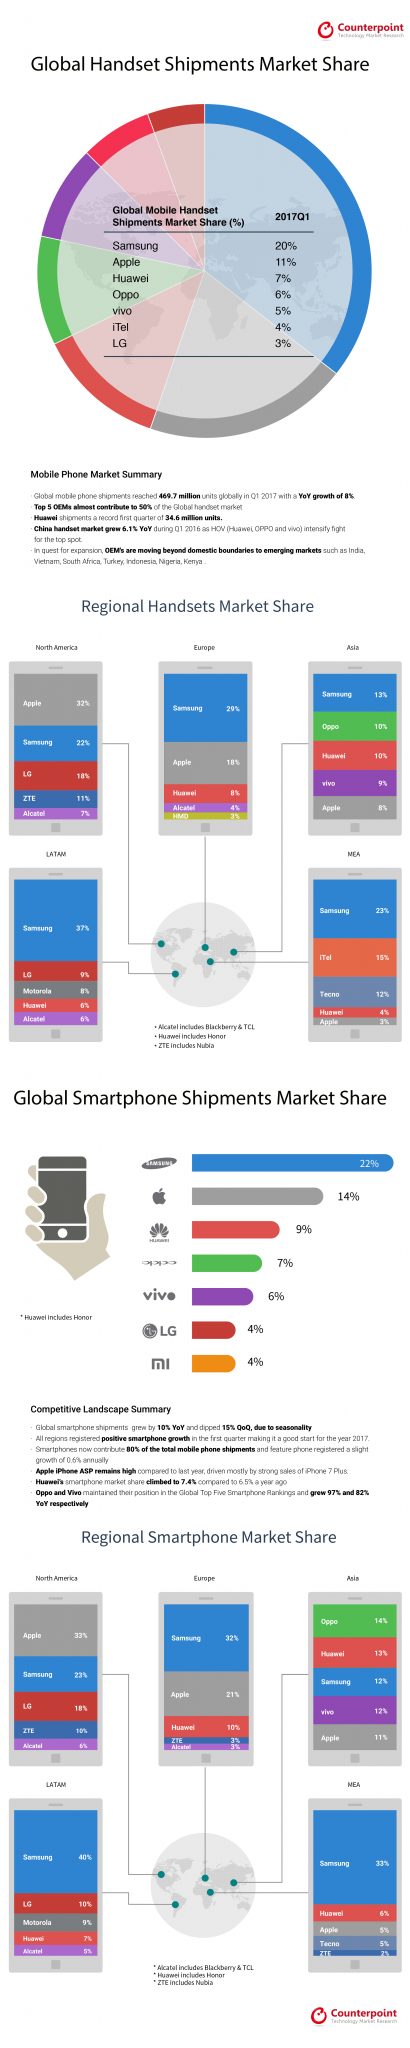 Infographic-Global Handset-Share-2017